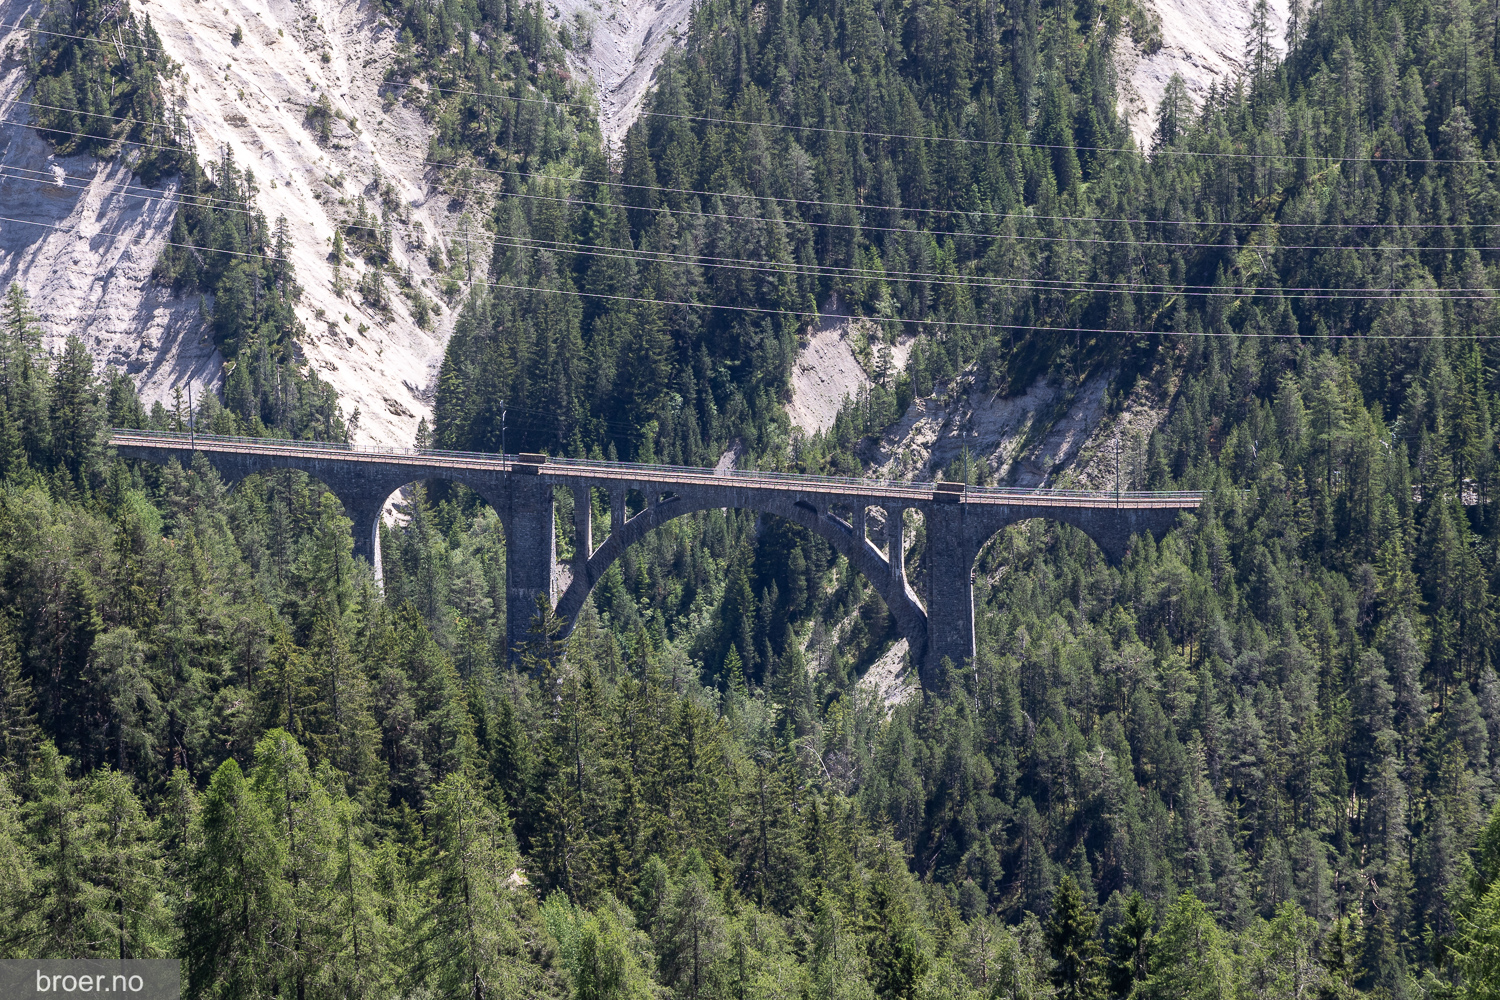 picture of Wiesen Viaduct